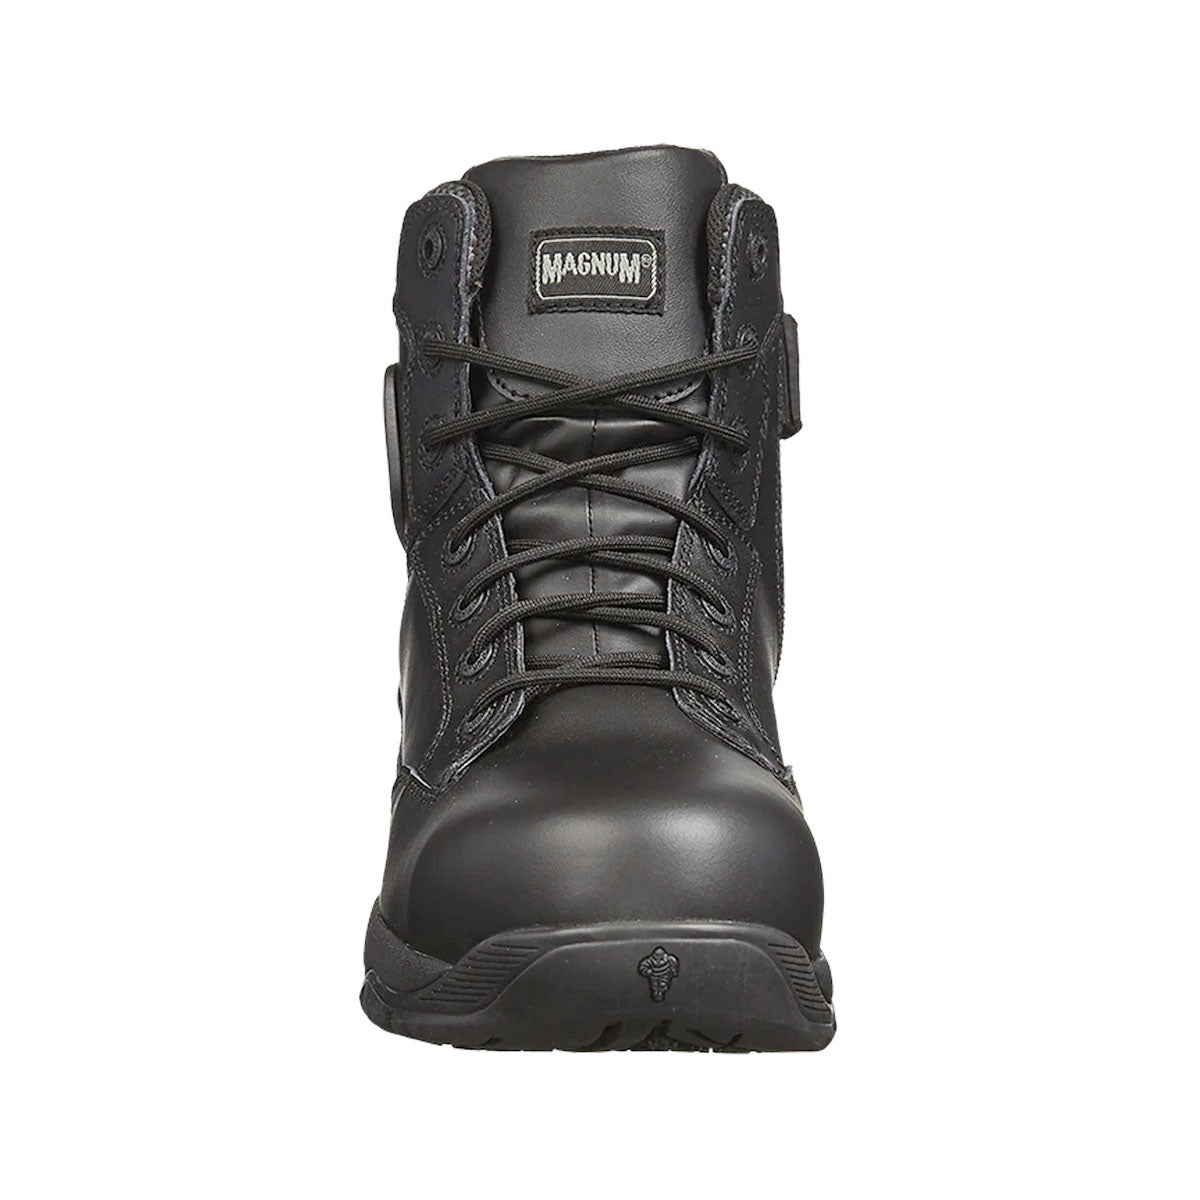 Magnum Strike Force 6.0 Leather Side-Zip Composite Toe Women's Boot Black Tactical Distributors Ltd New Zealand